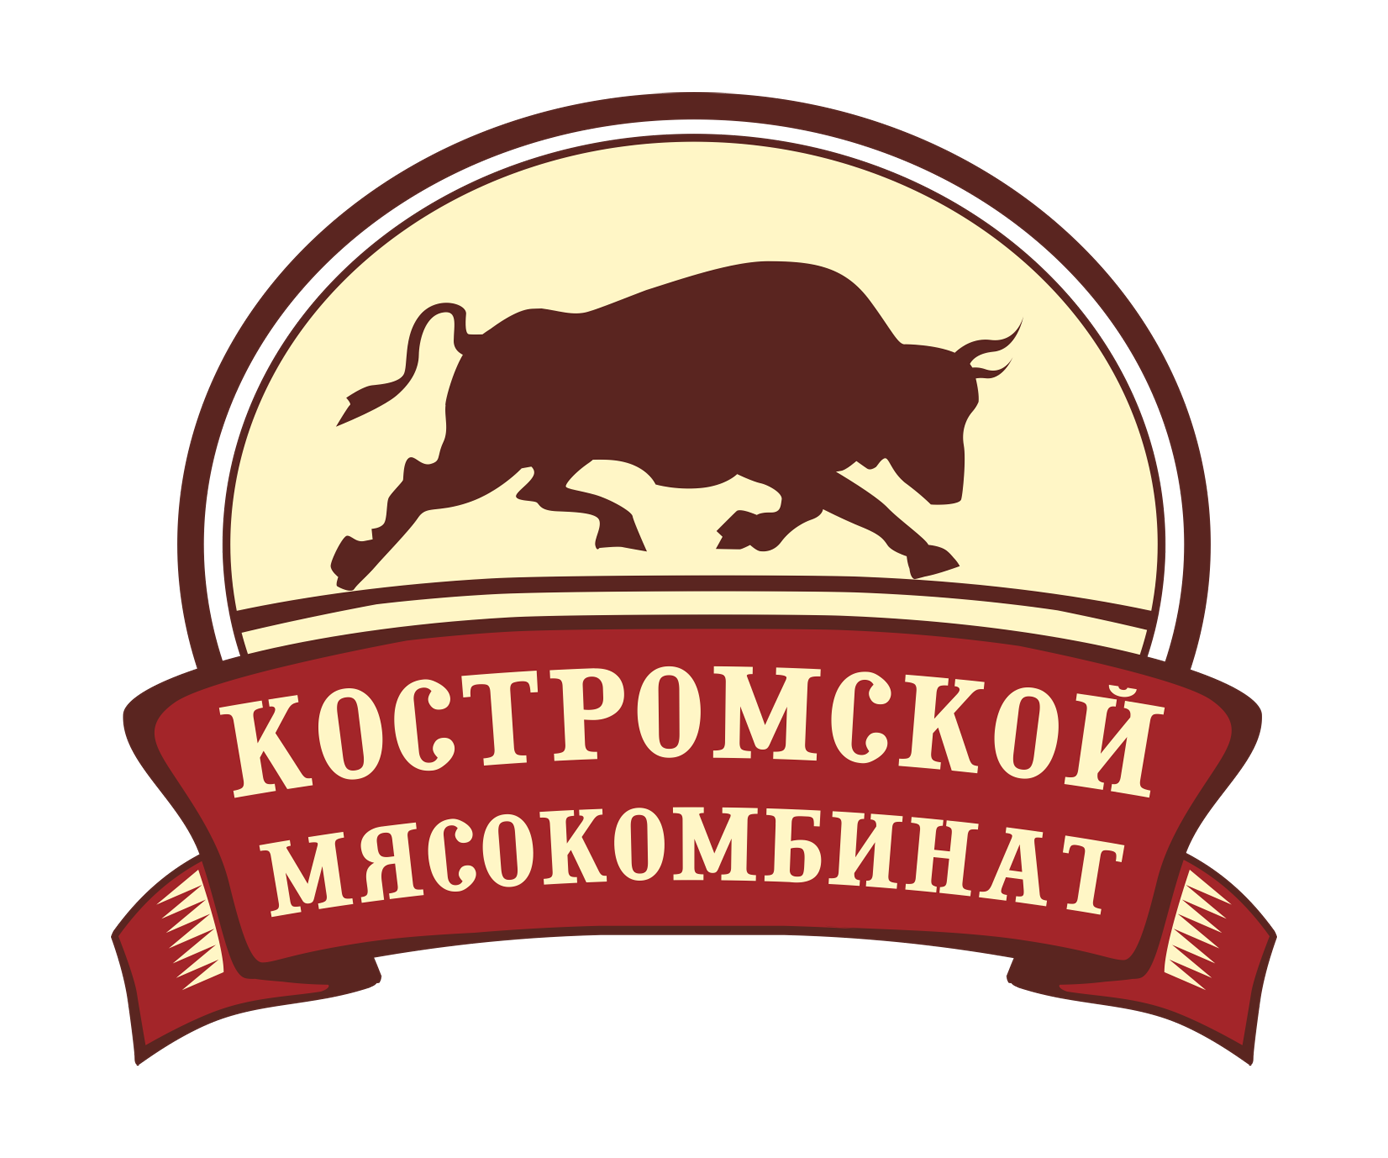 Костромской мясокомбинат